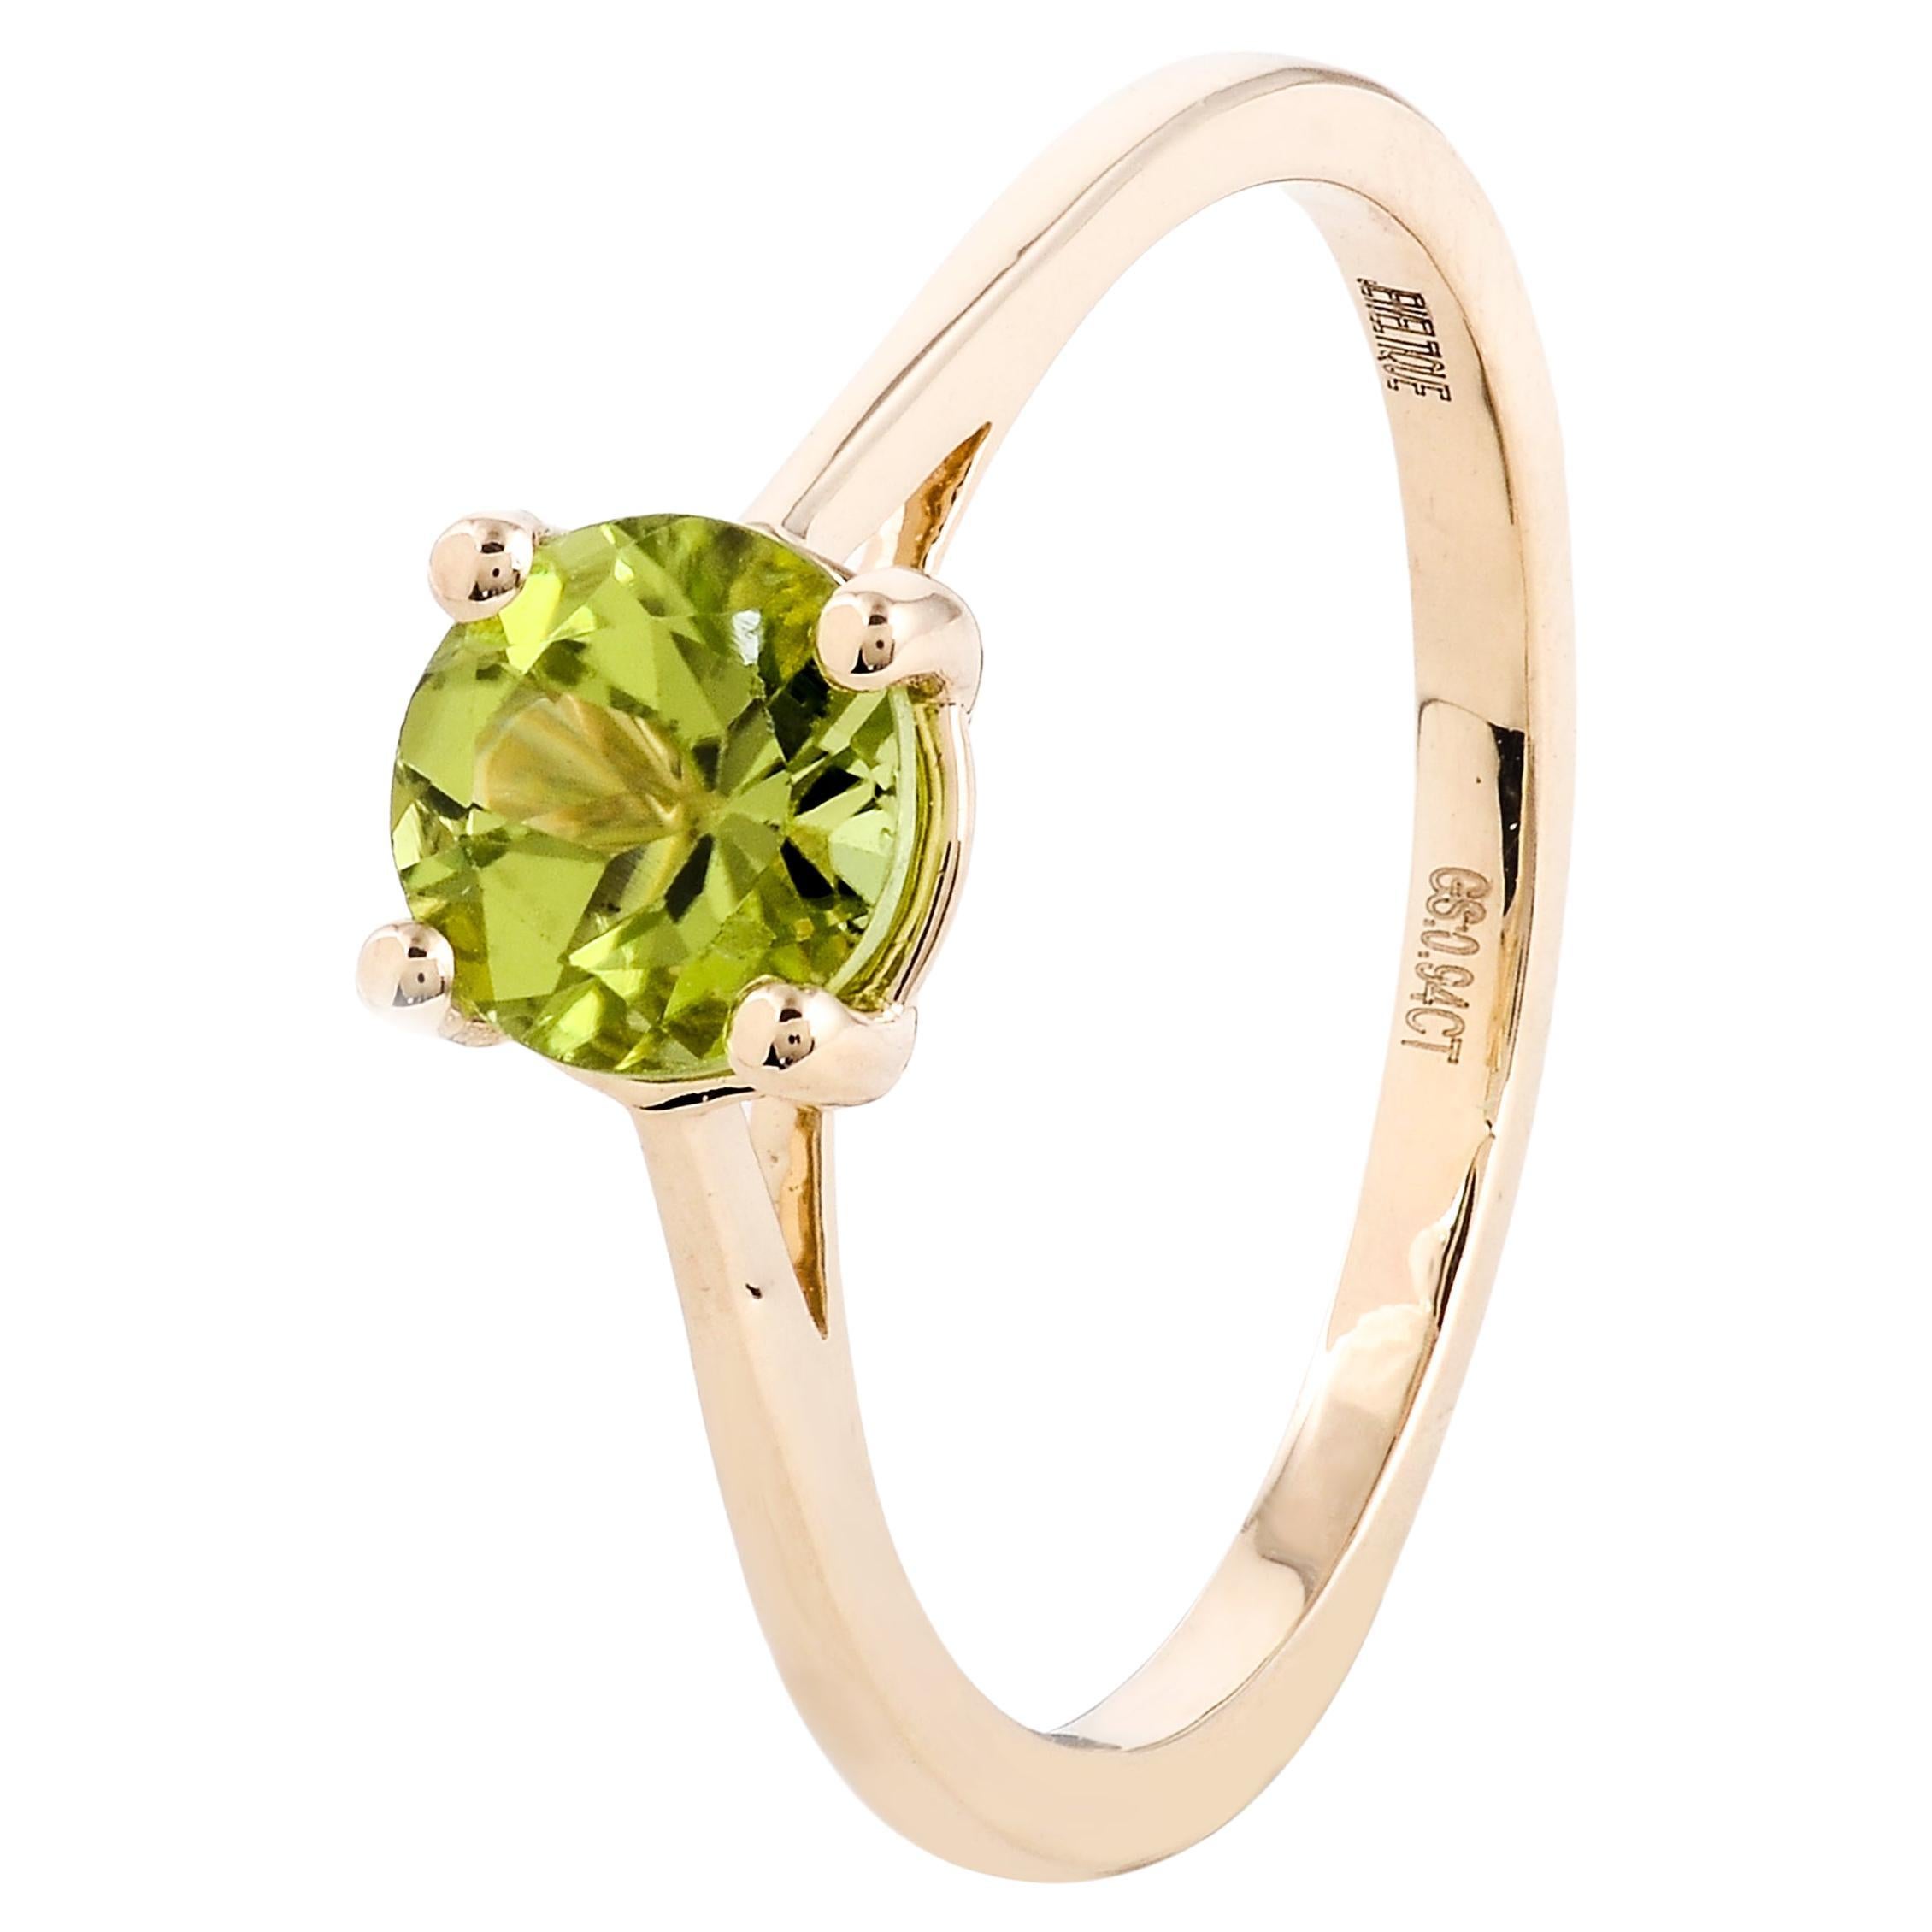 Elegant 14K Peridot Cocktail Ring, Size 7 - Stunning Statement Jewelry Piece